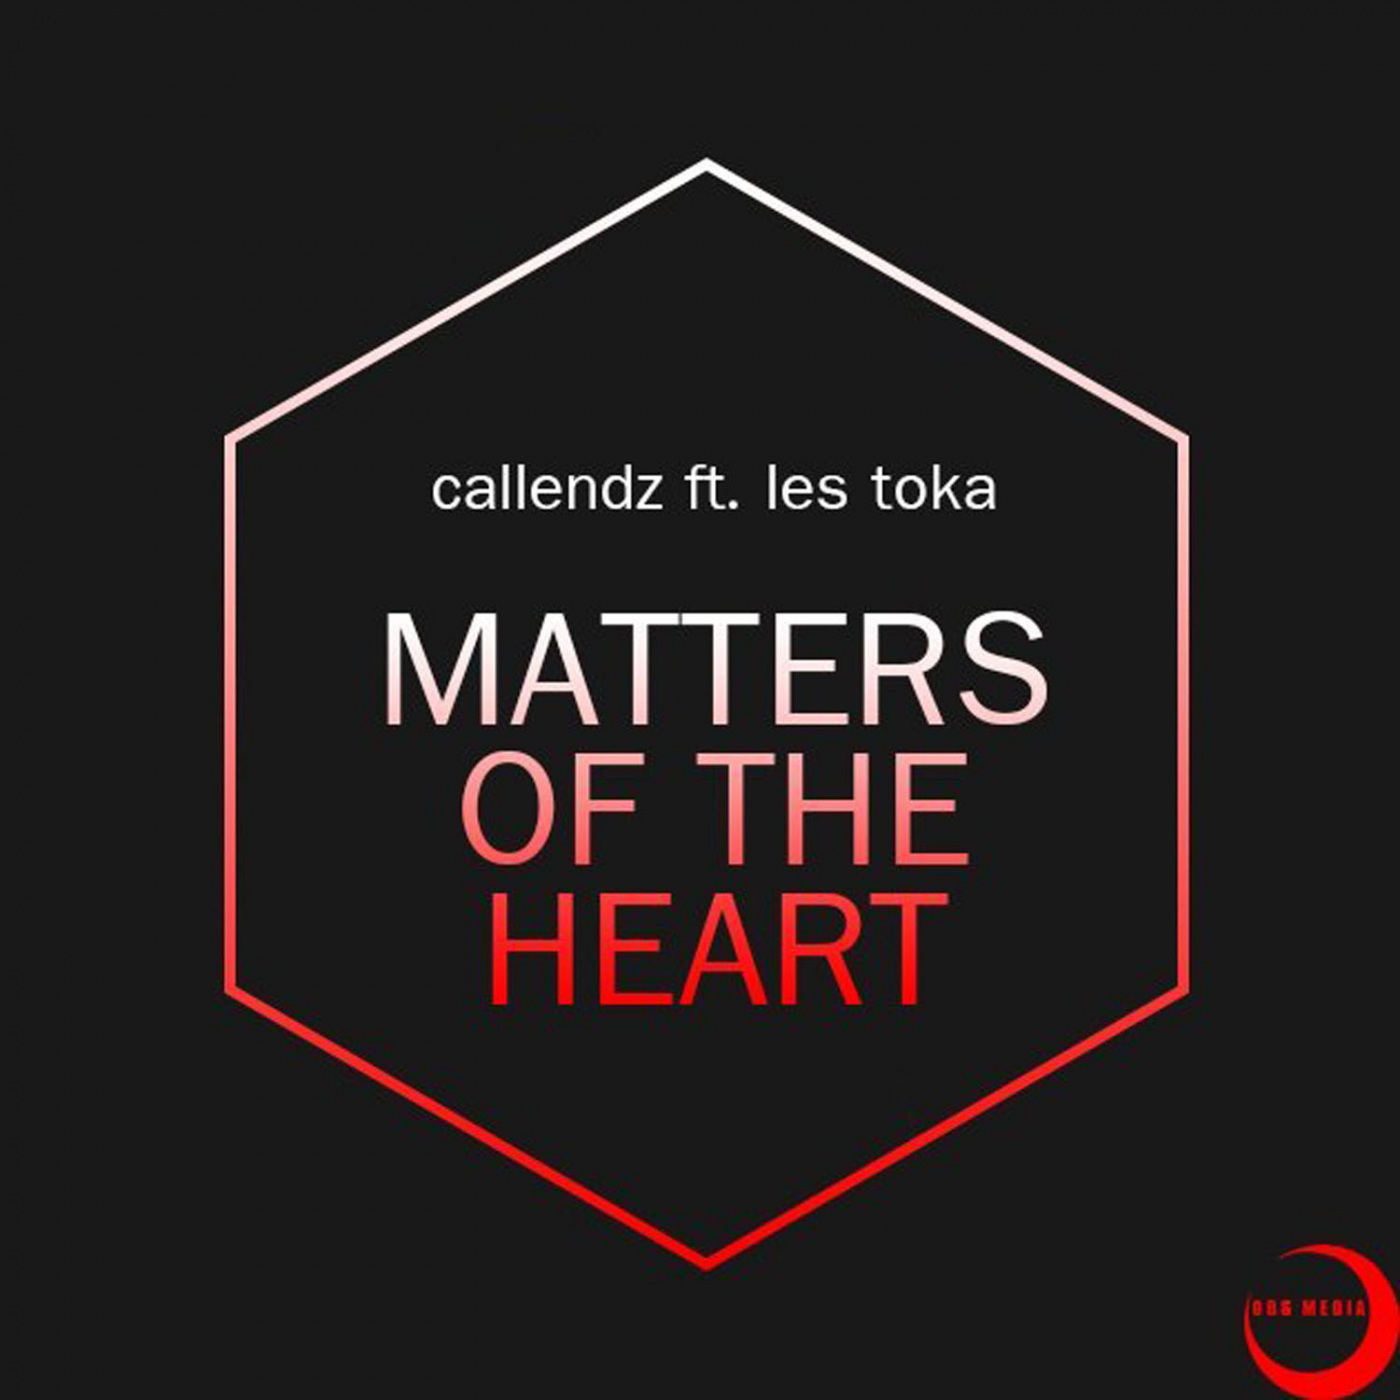 Callendz - Matters Of The Heart Feat. Les Toka / OBS Media